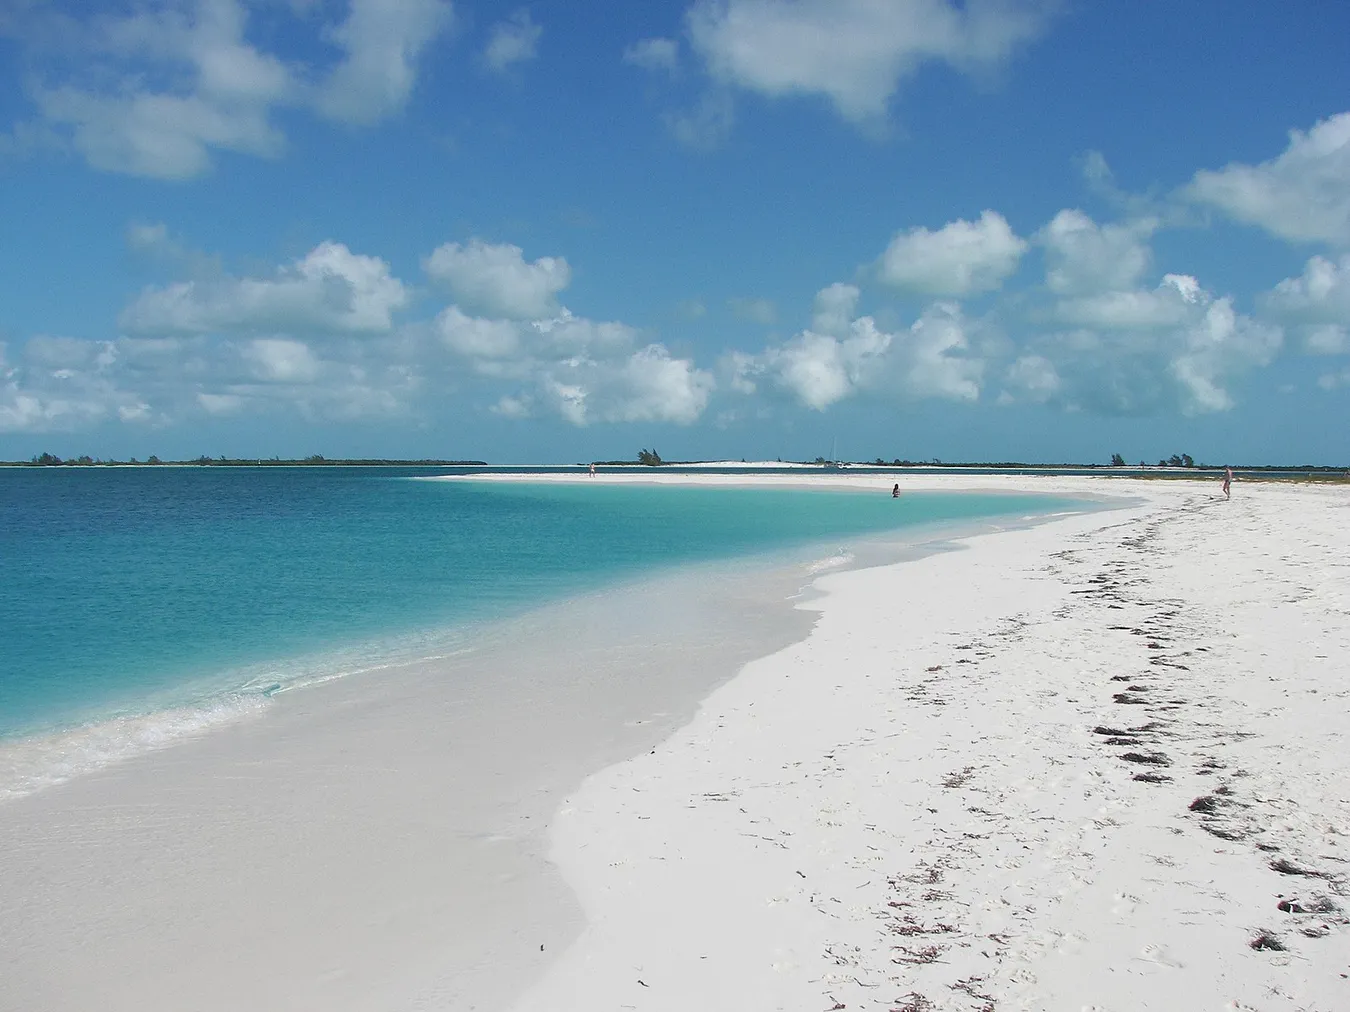 La orilla de arena blanca de la playa bañada de agua turquesa del Mar Caribe